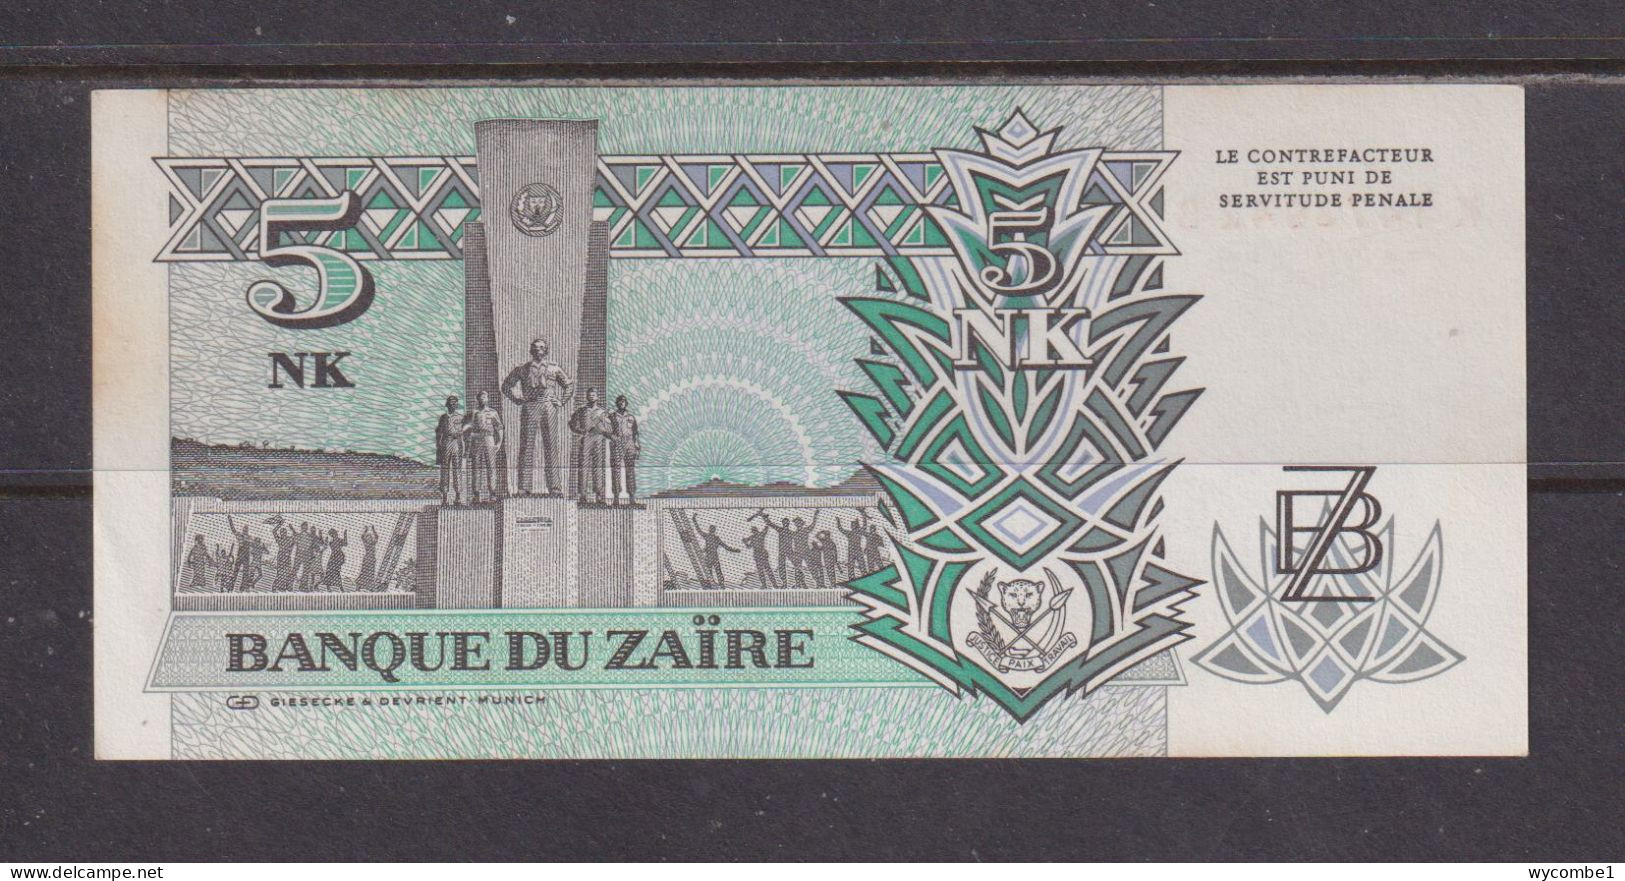 ZAIRE - 1993 5 New Likuta AUNC/XF Banknote As Scans - Zaïre